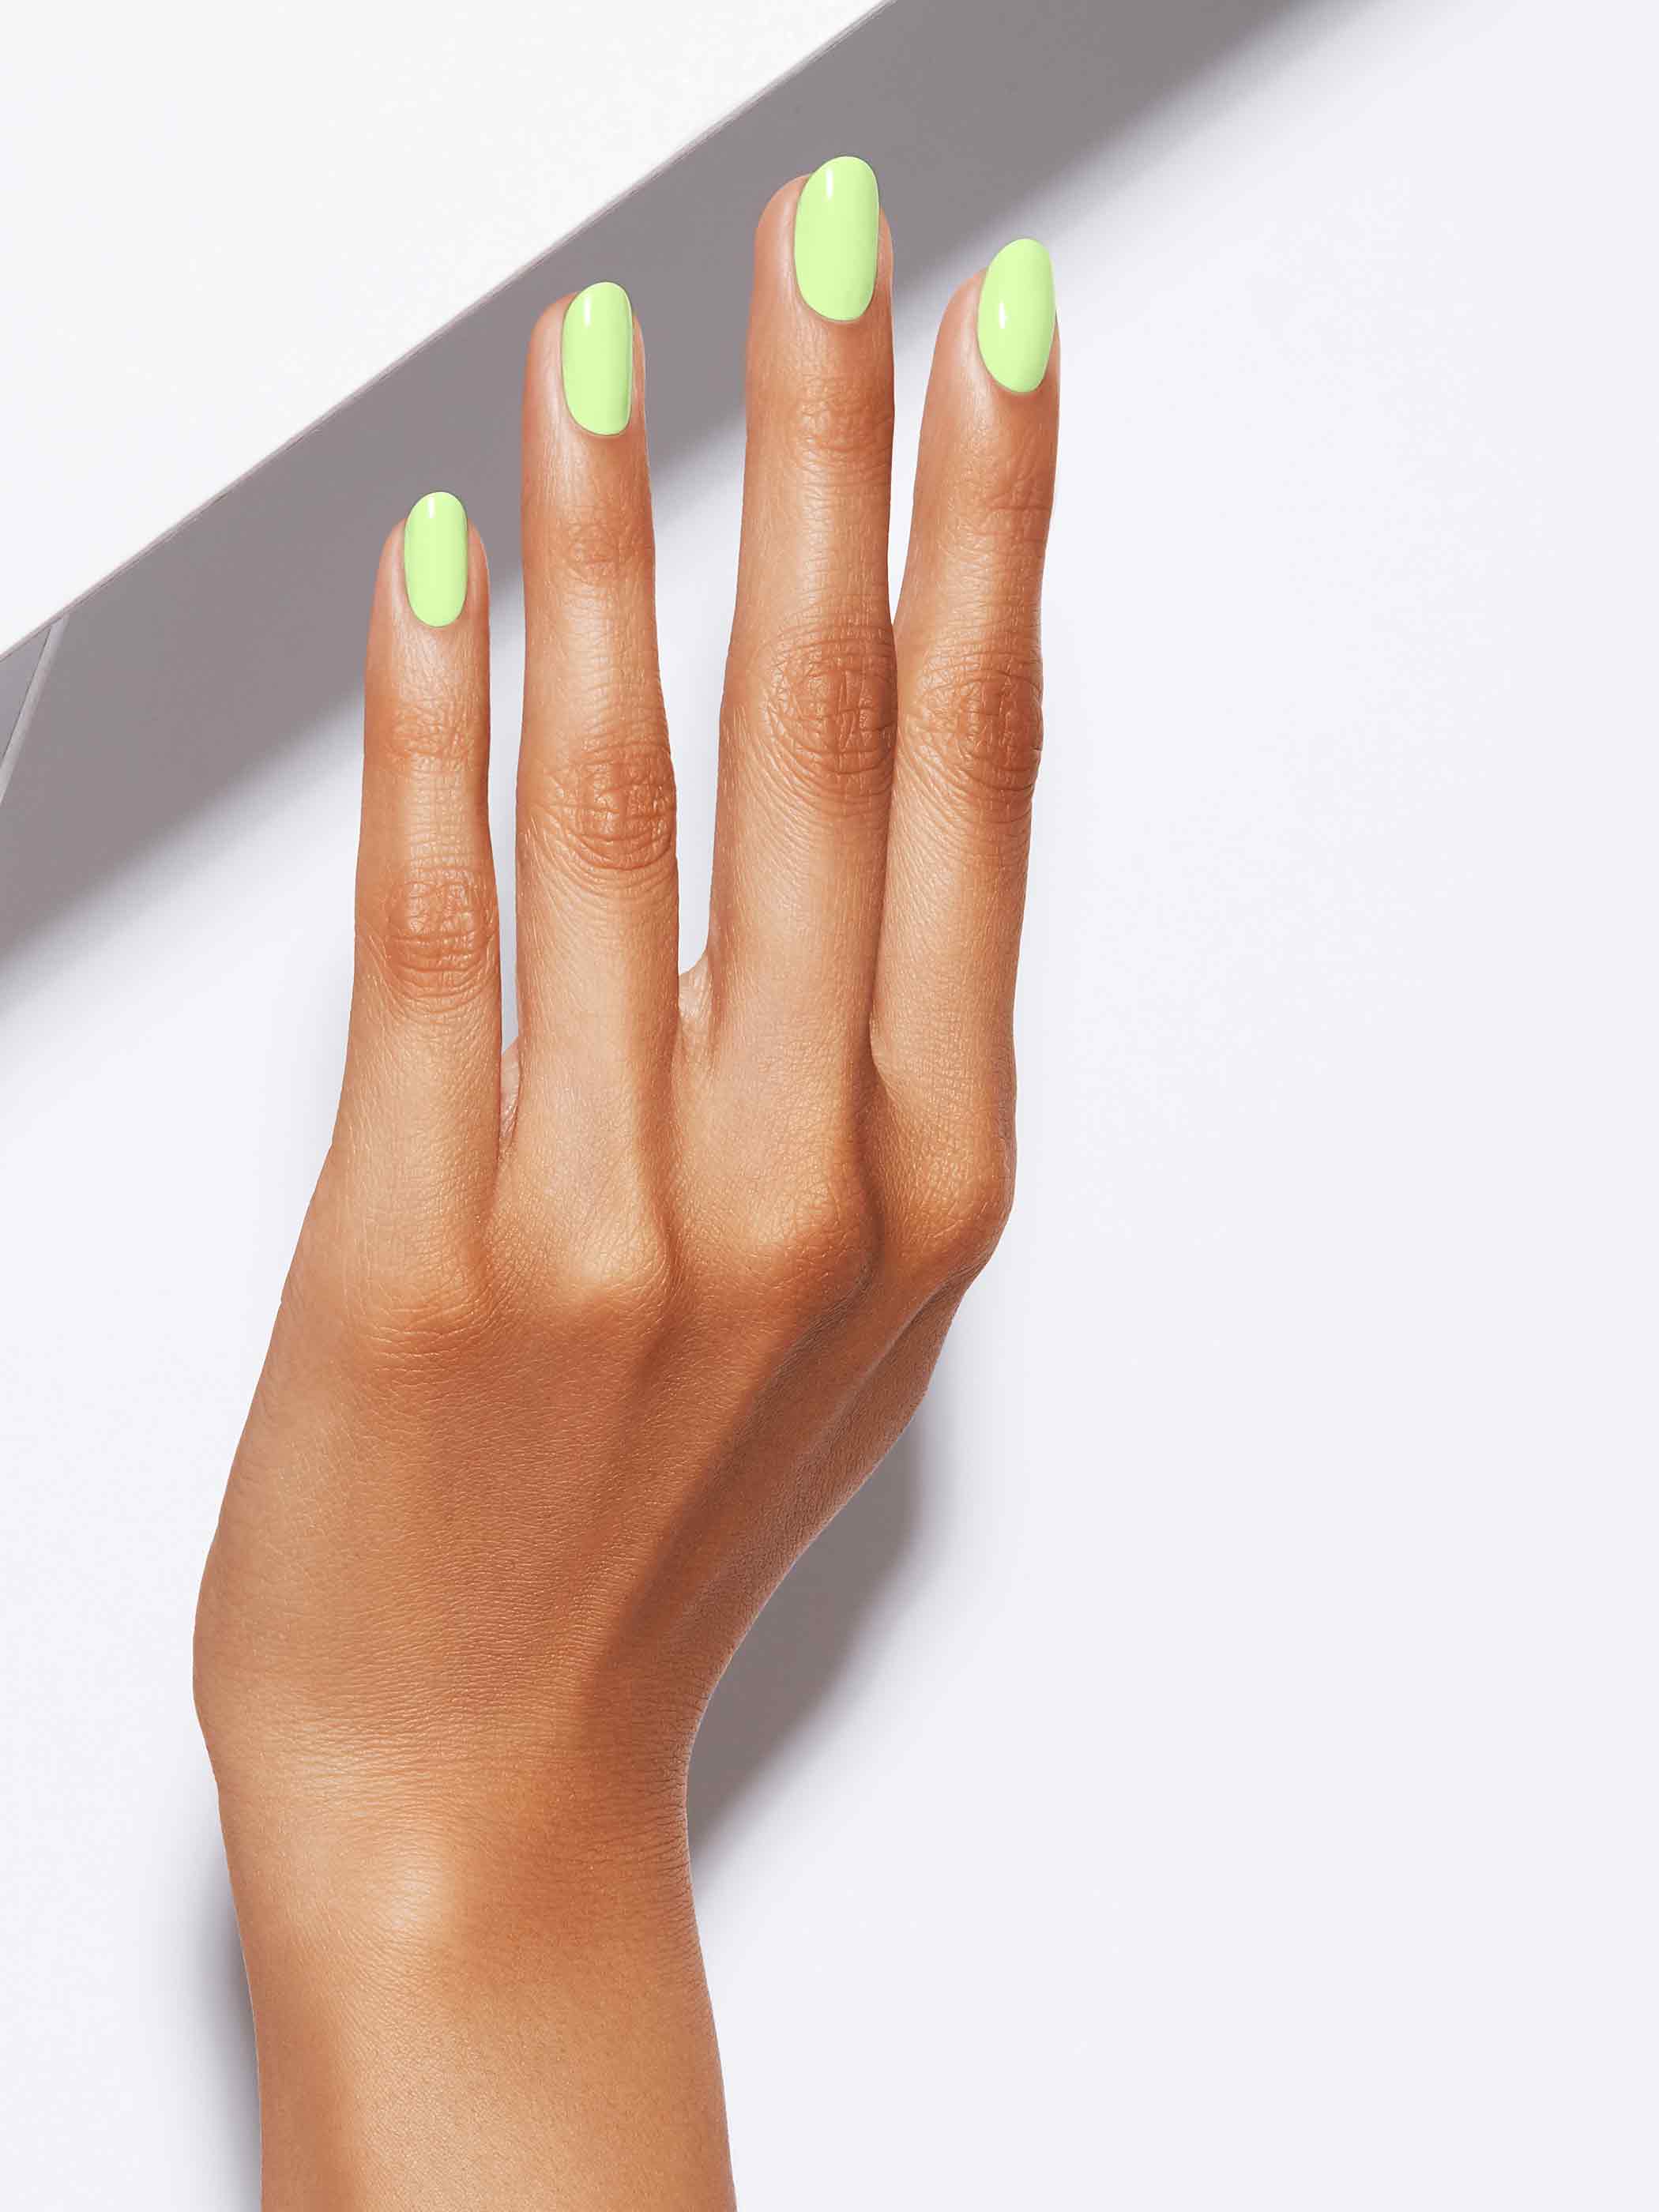 Neon pastel yellow/green full-coverage nail polish, Medium